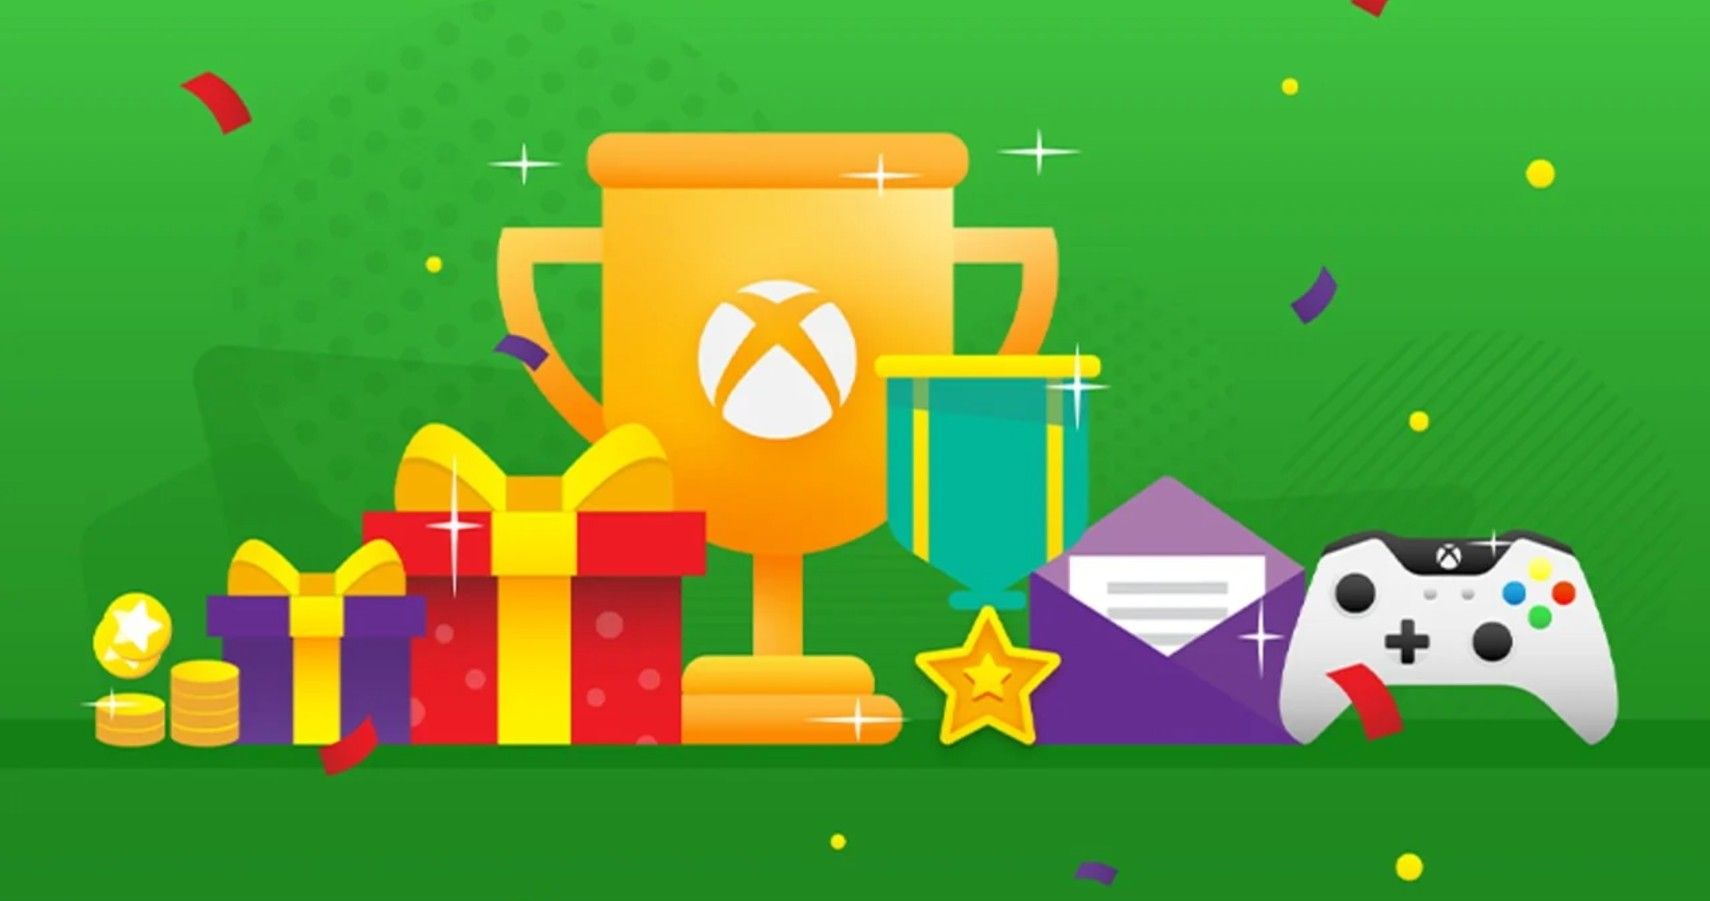 Achievements on Xbox Live 50k Gamerscore